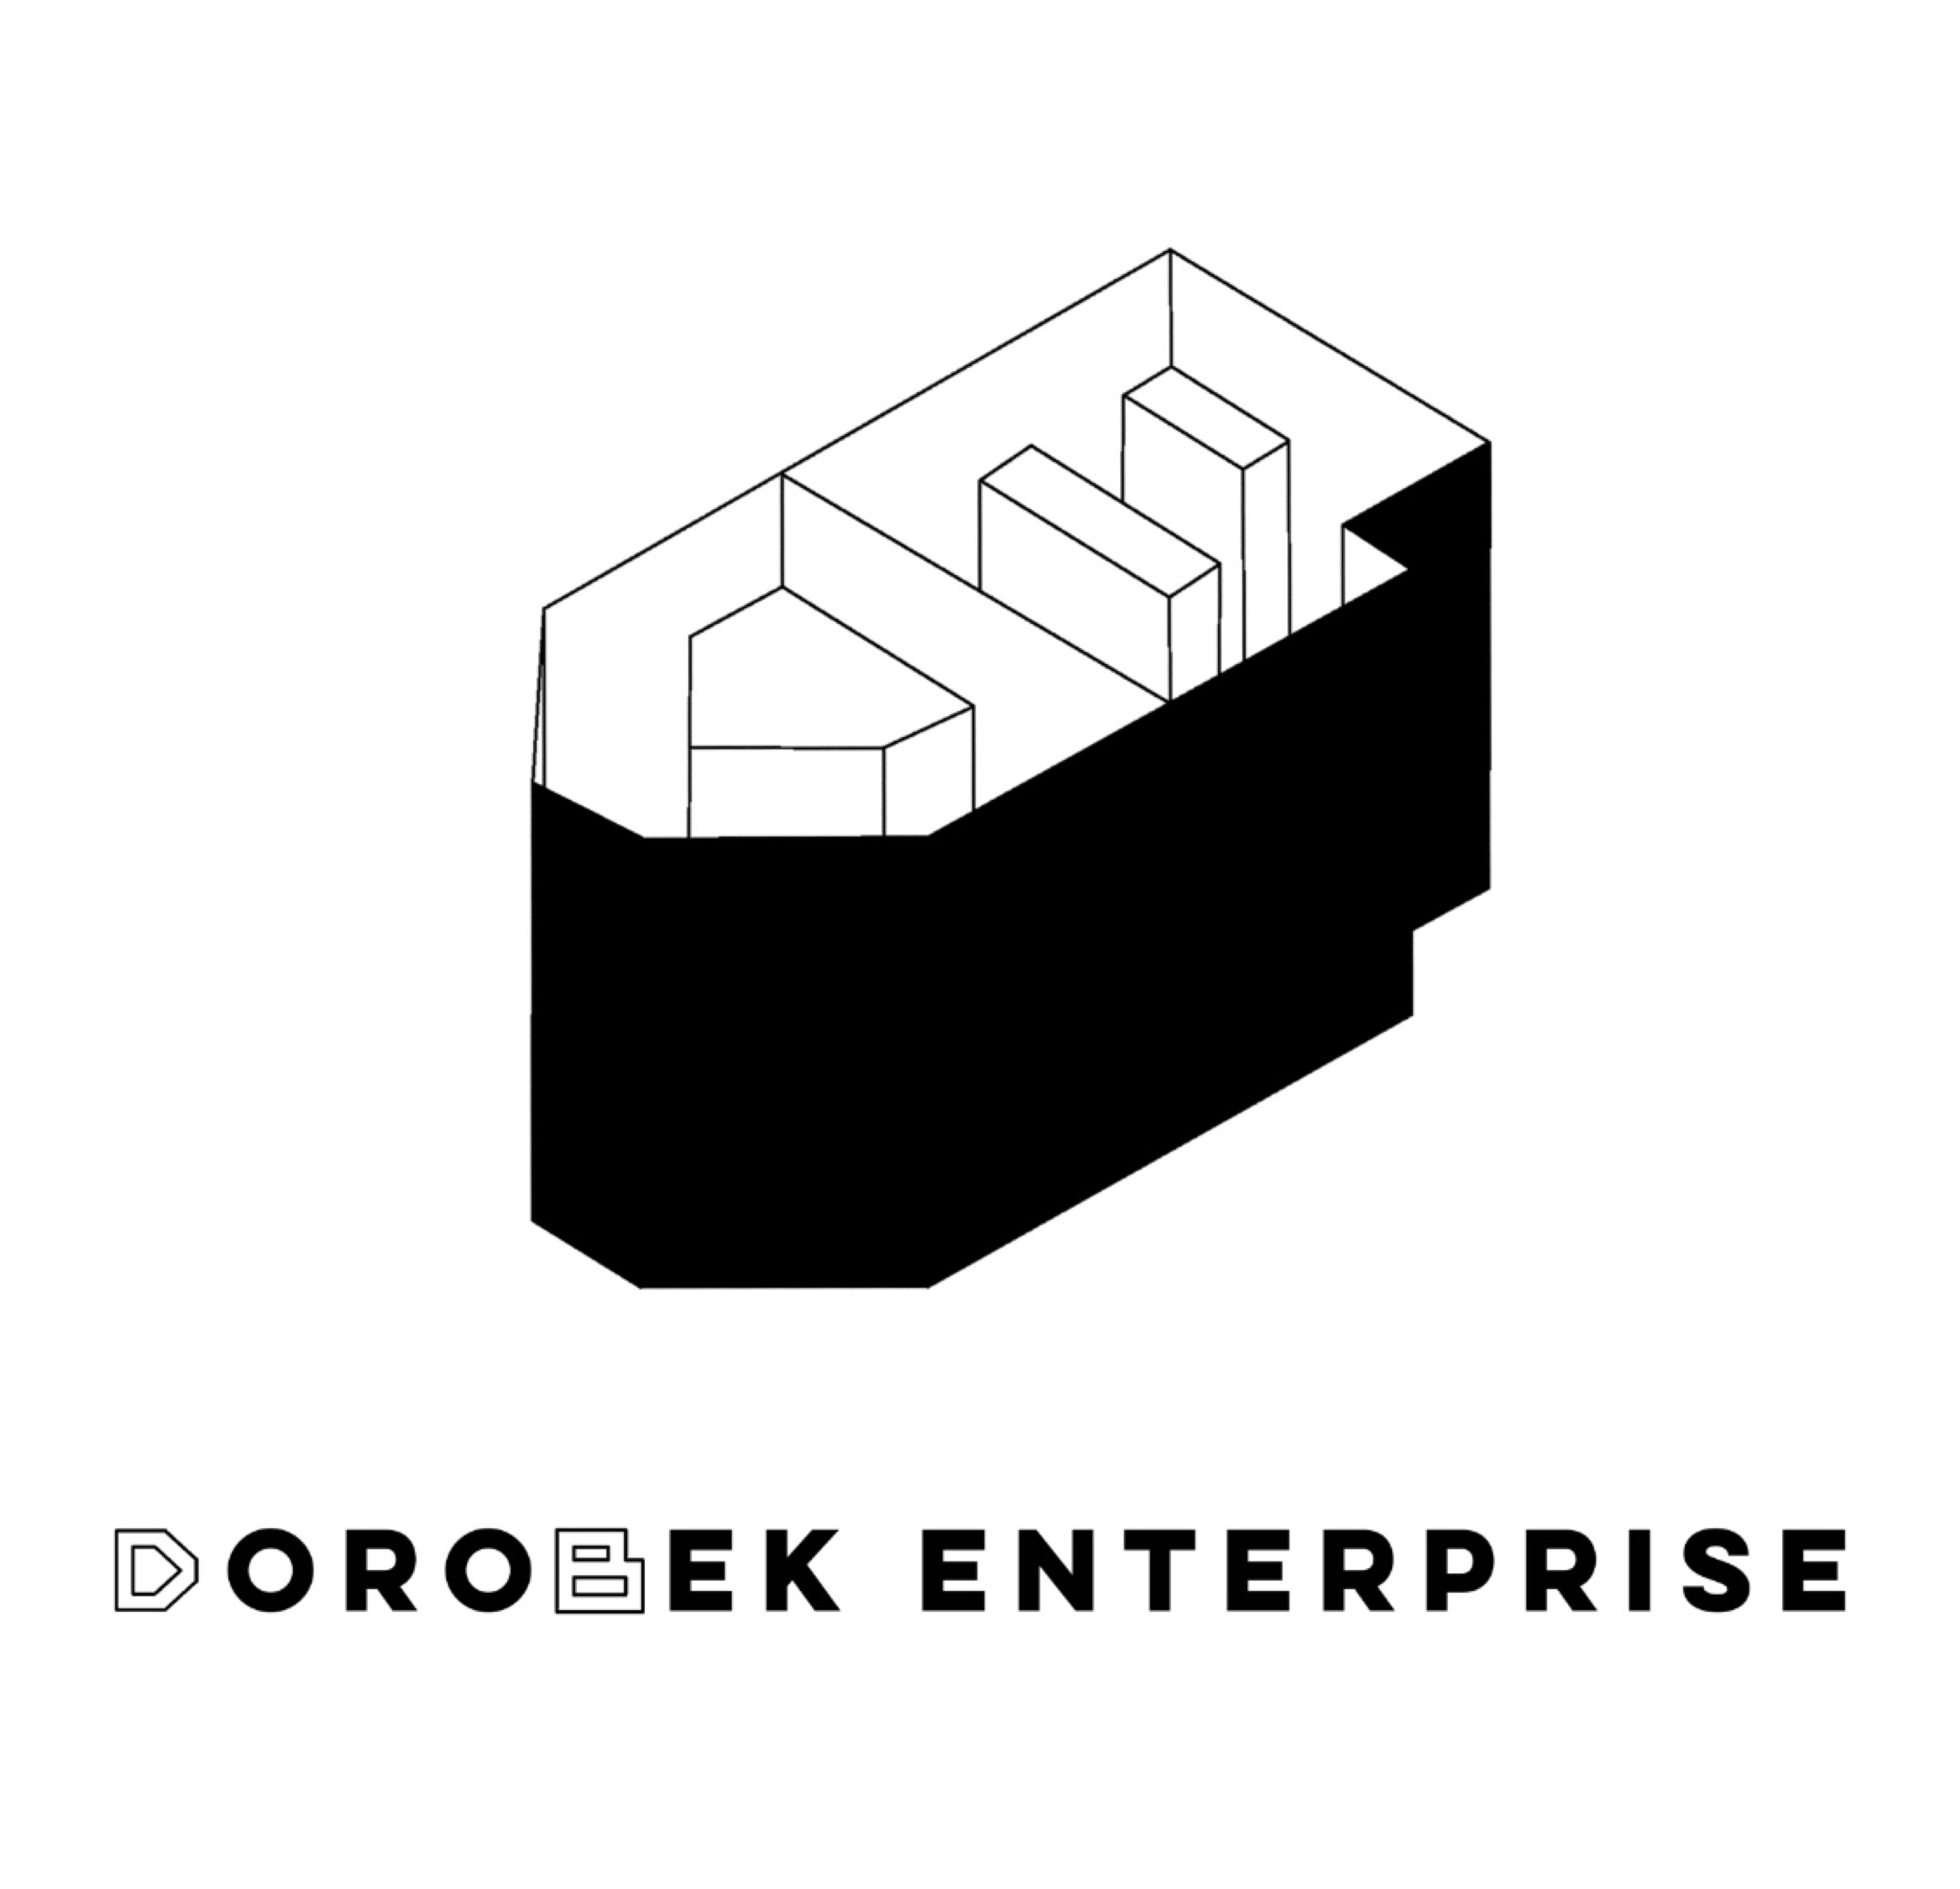 Dorobek Enterprise Logo